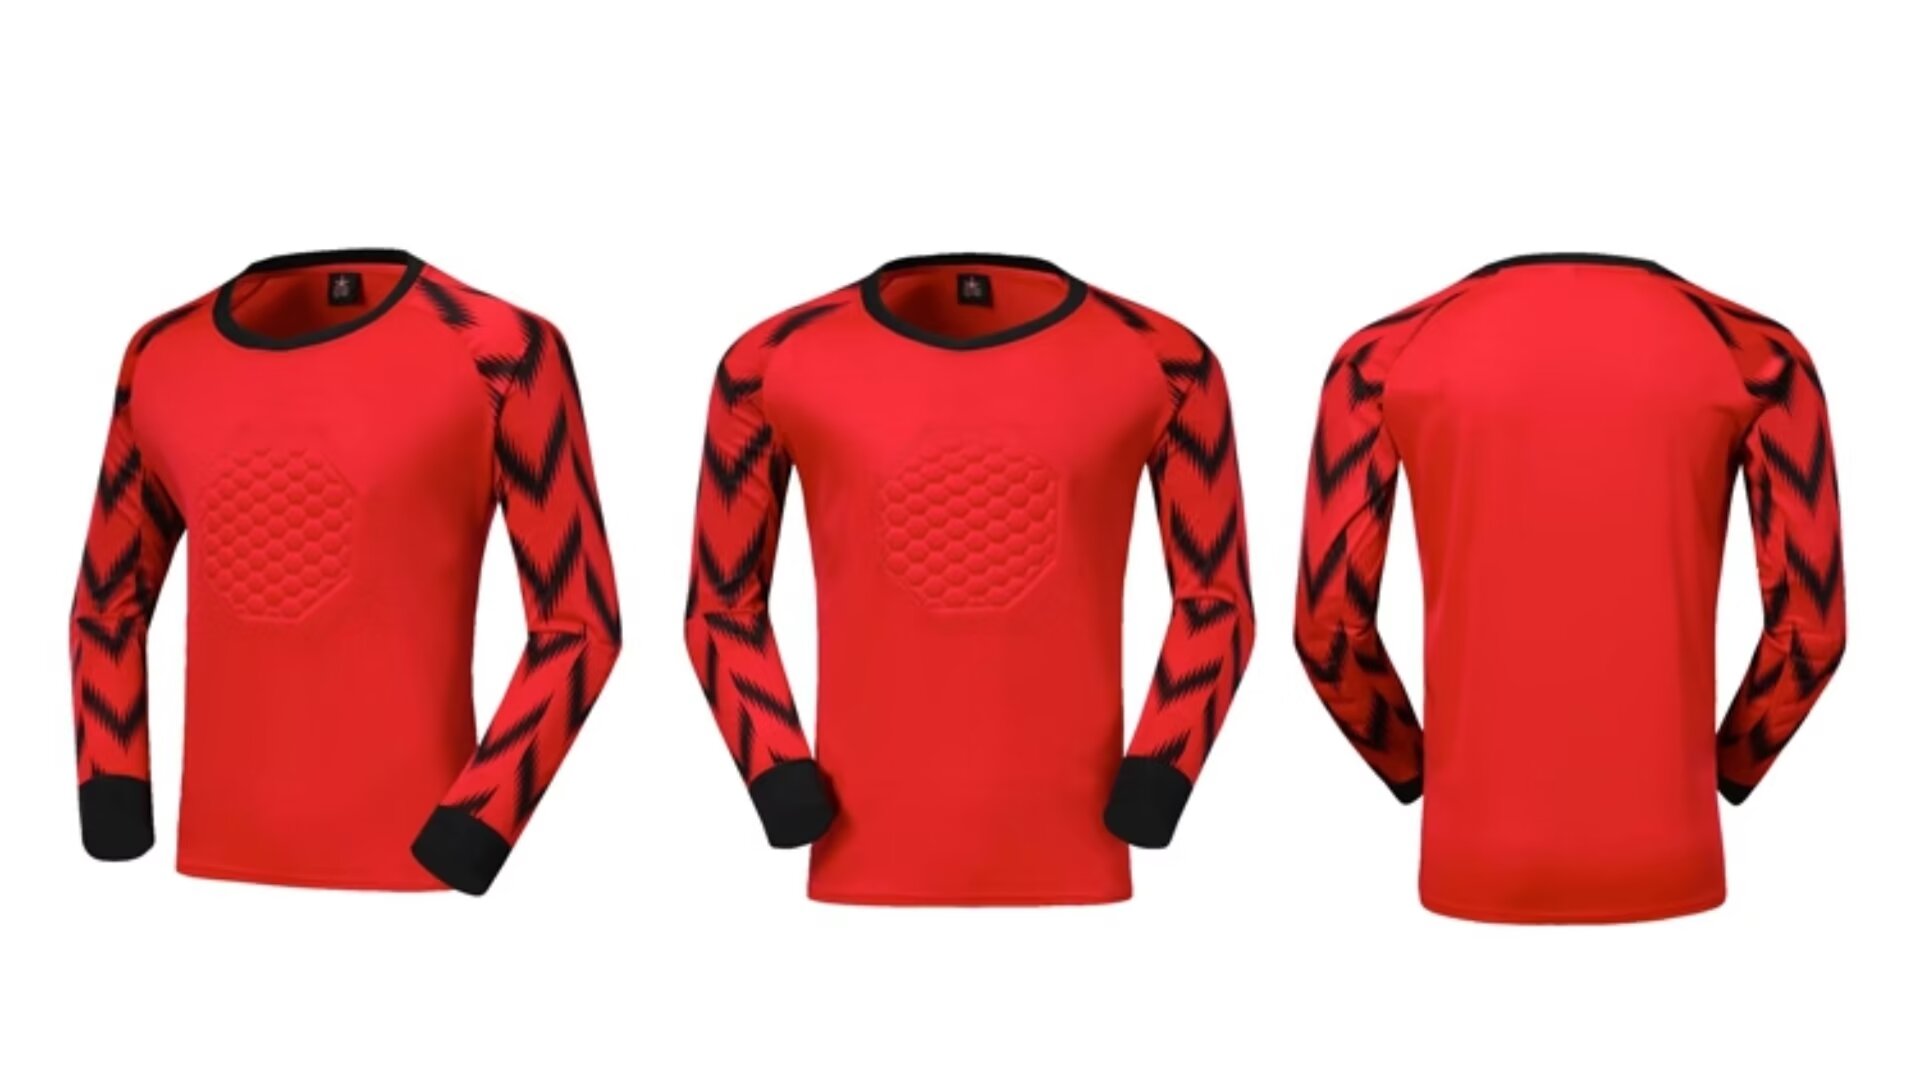 Goalkeeper Jersey 019 - Red